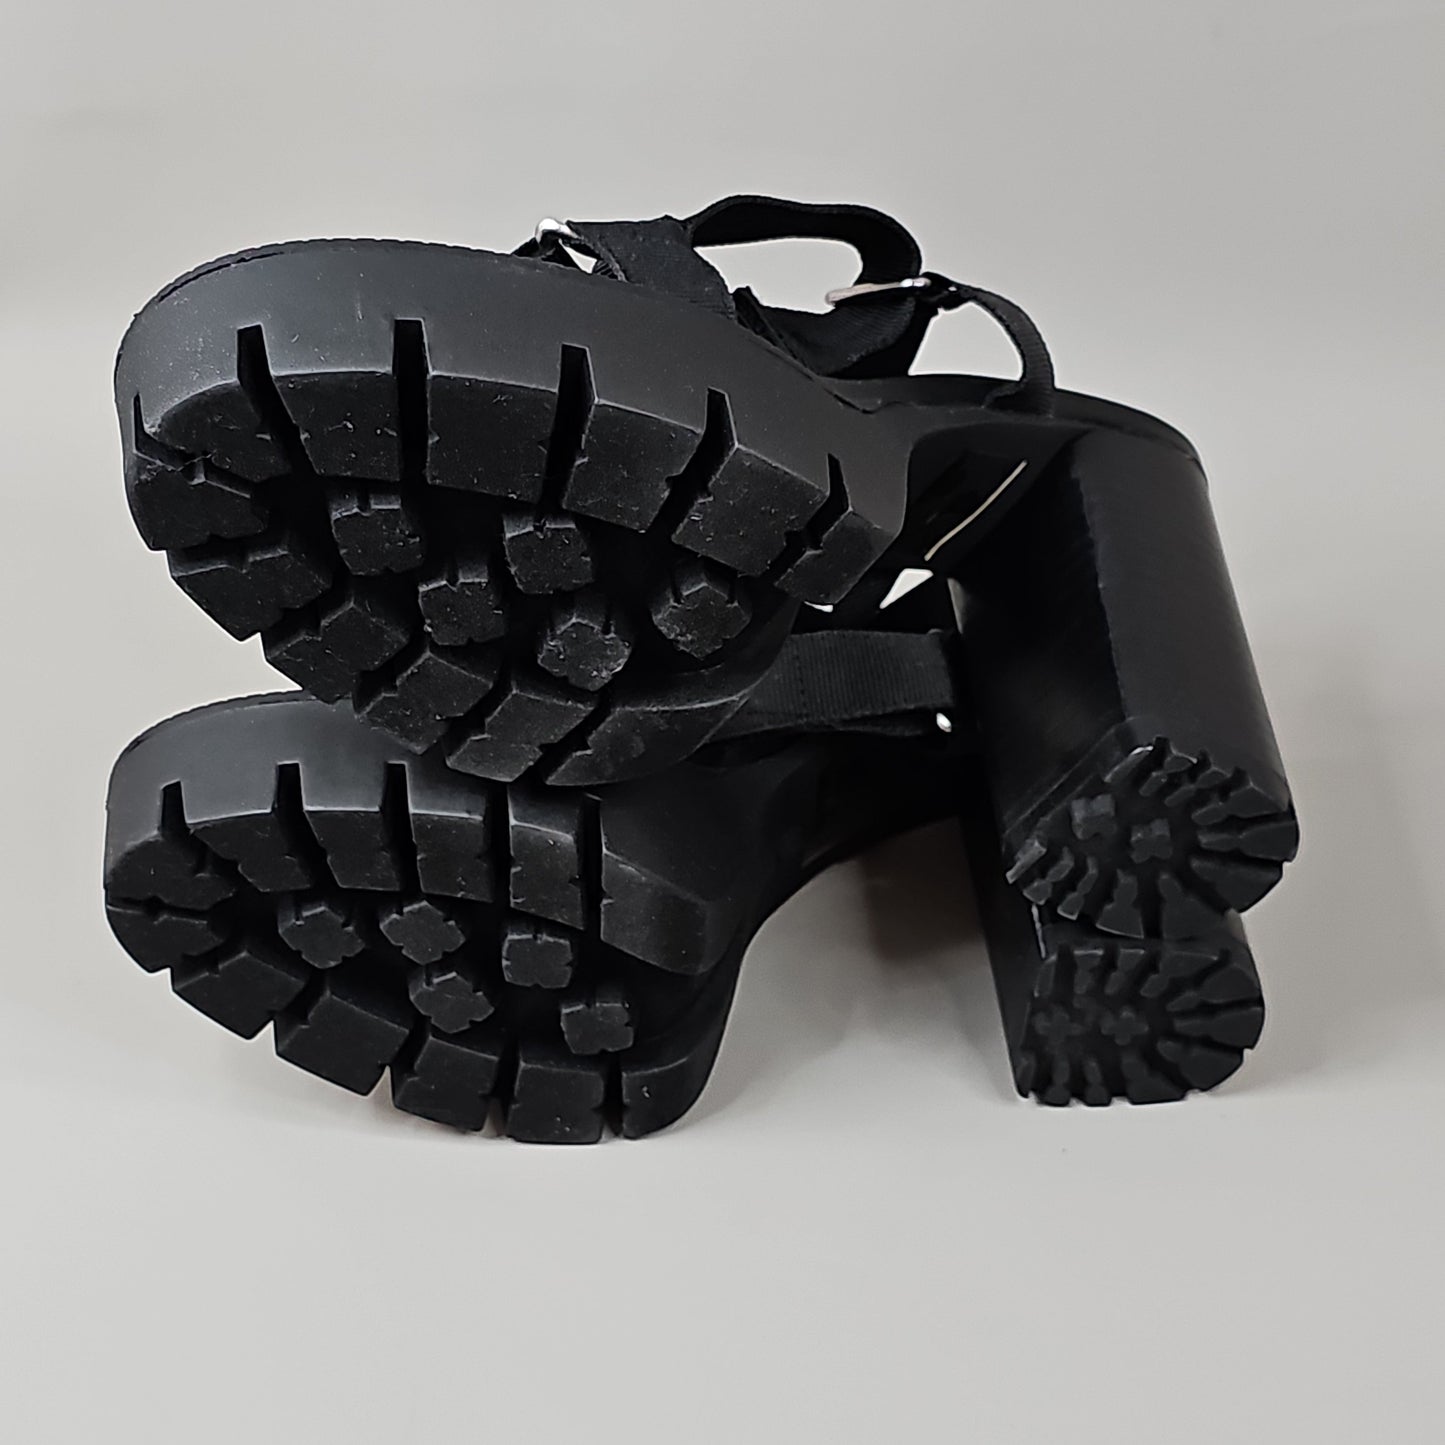 CHARLES BY CHARLES DAVID Women's Vast Sport Sandal Shoe Sz 5 M Black (New)